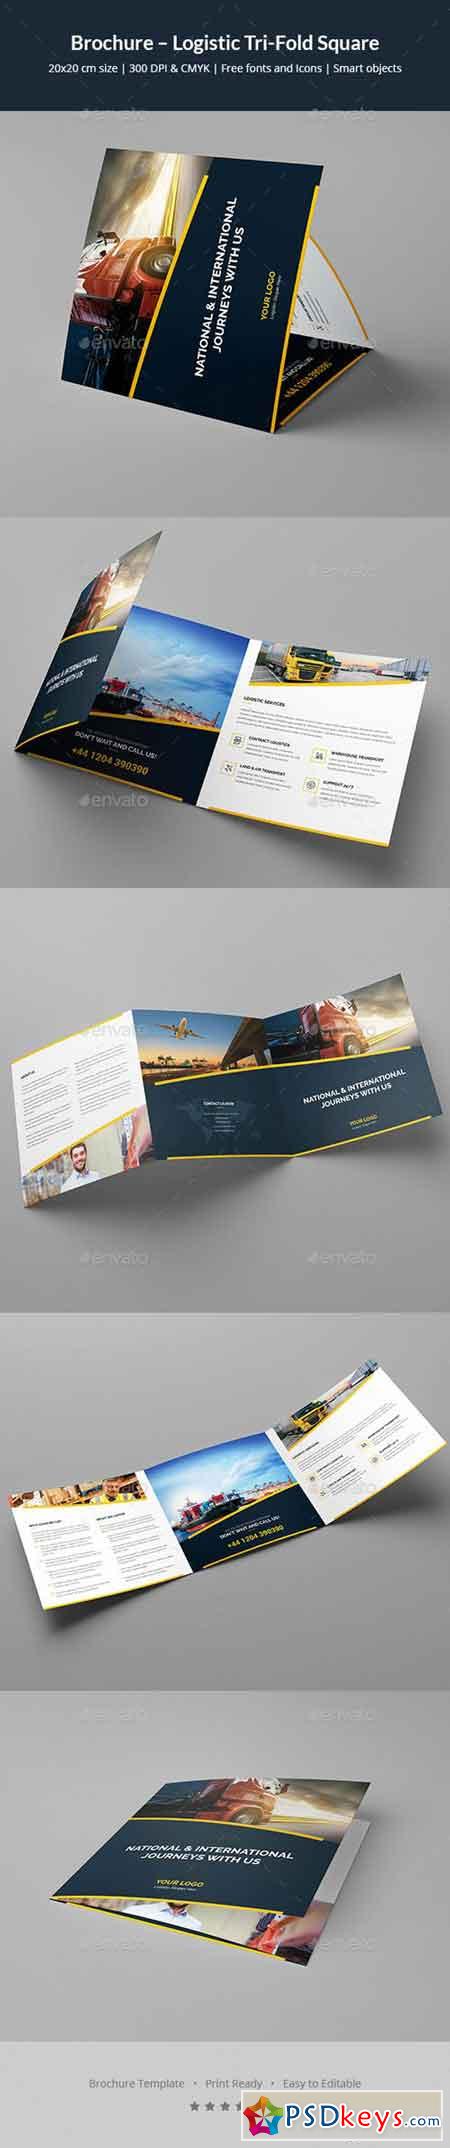 Brochure - Logistic Tri-Fold Square 20269619